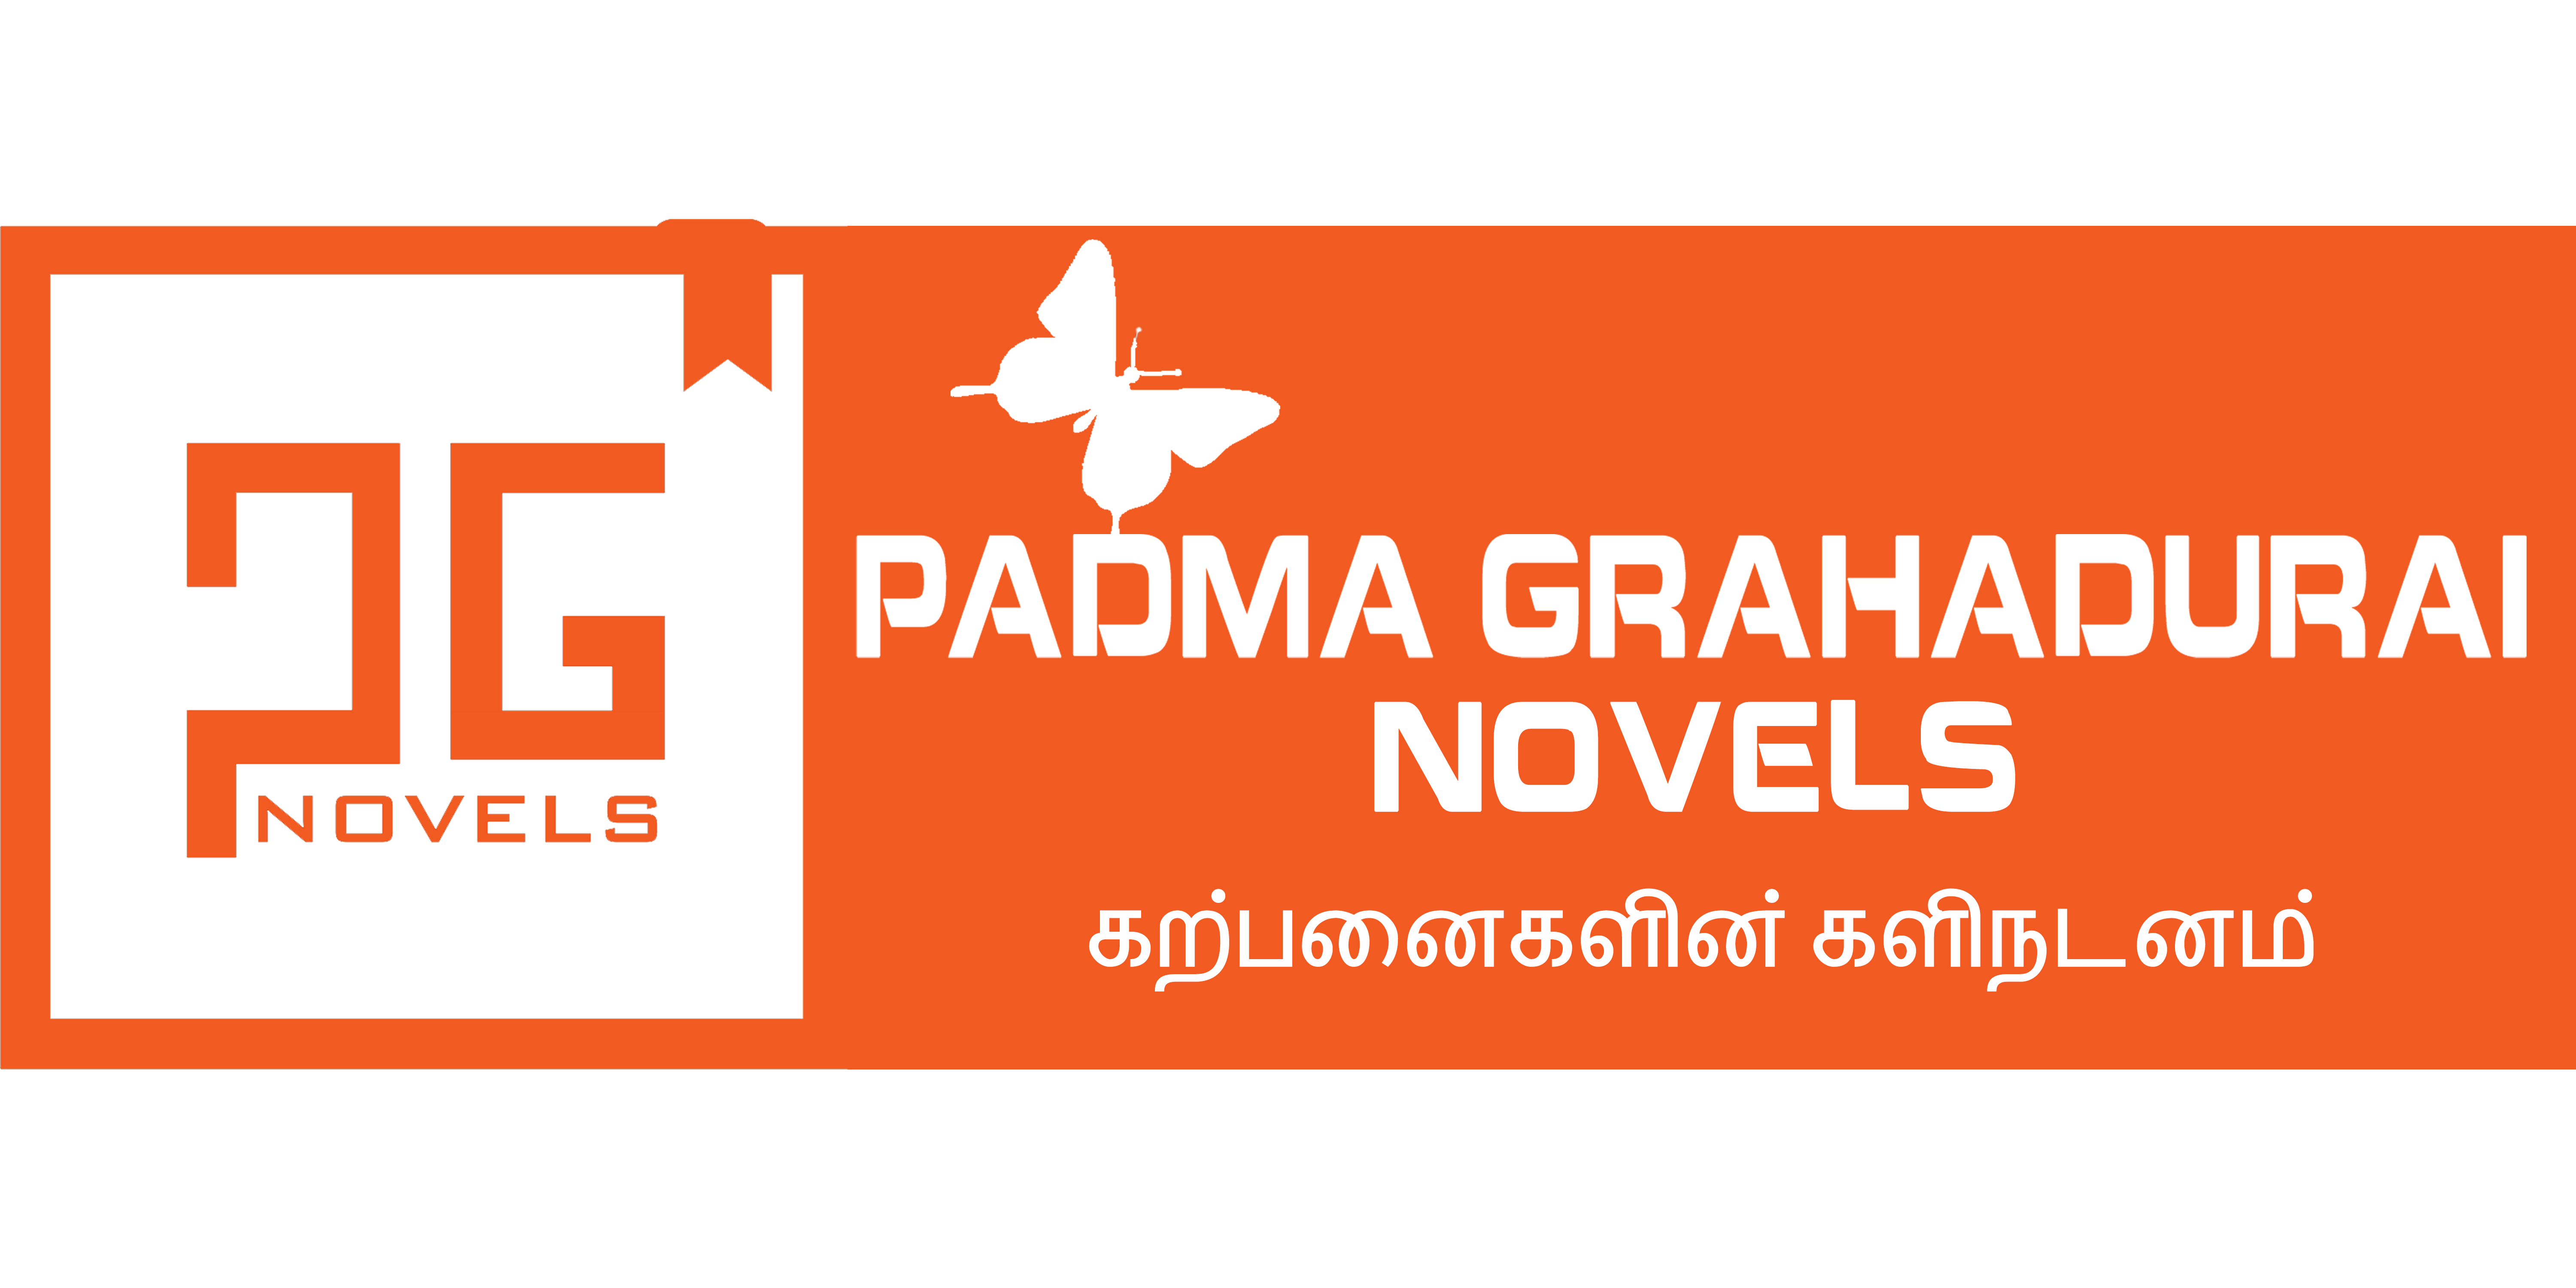 padma grahadurai novels pdf